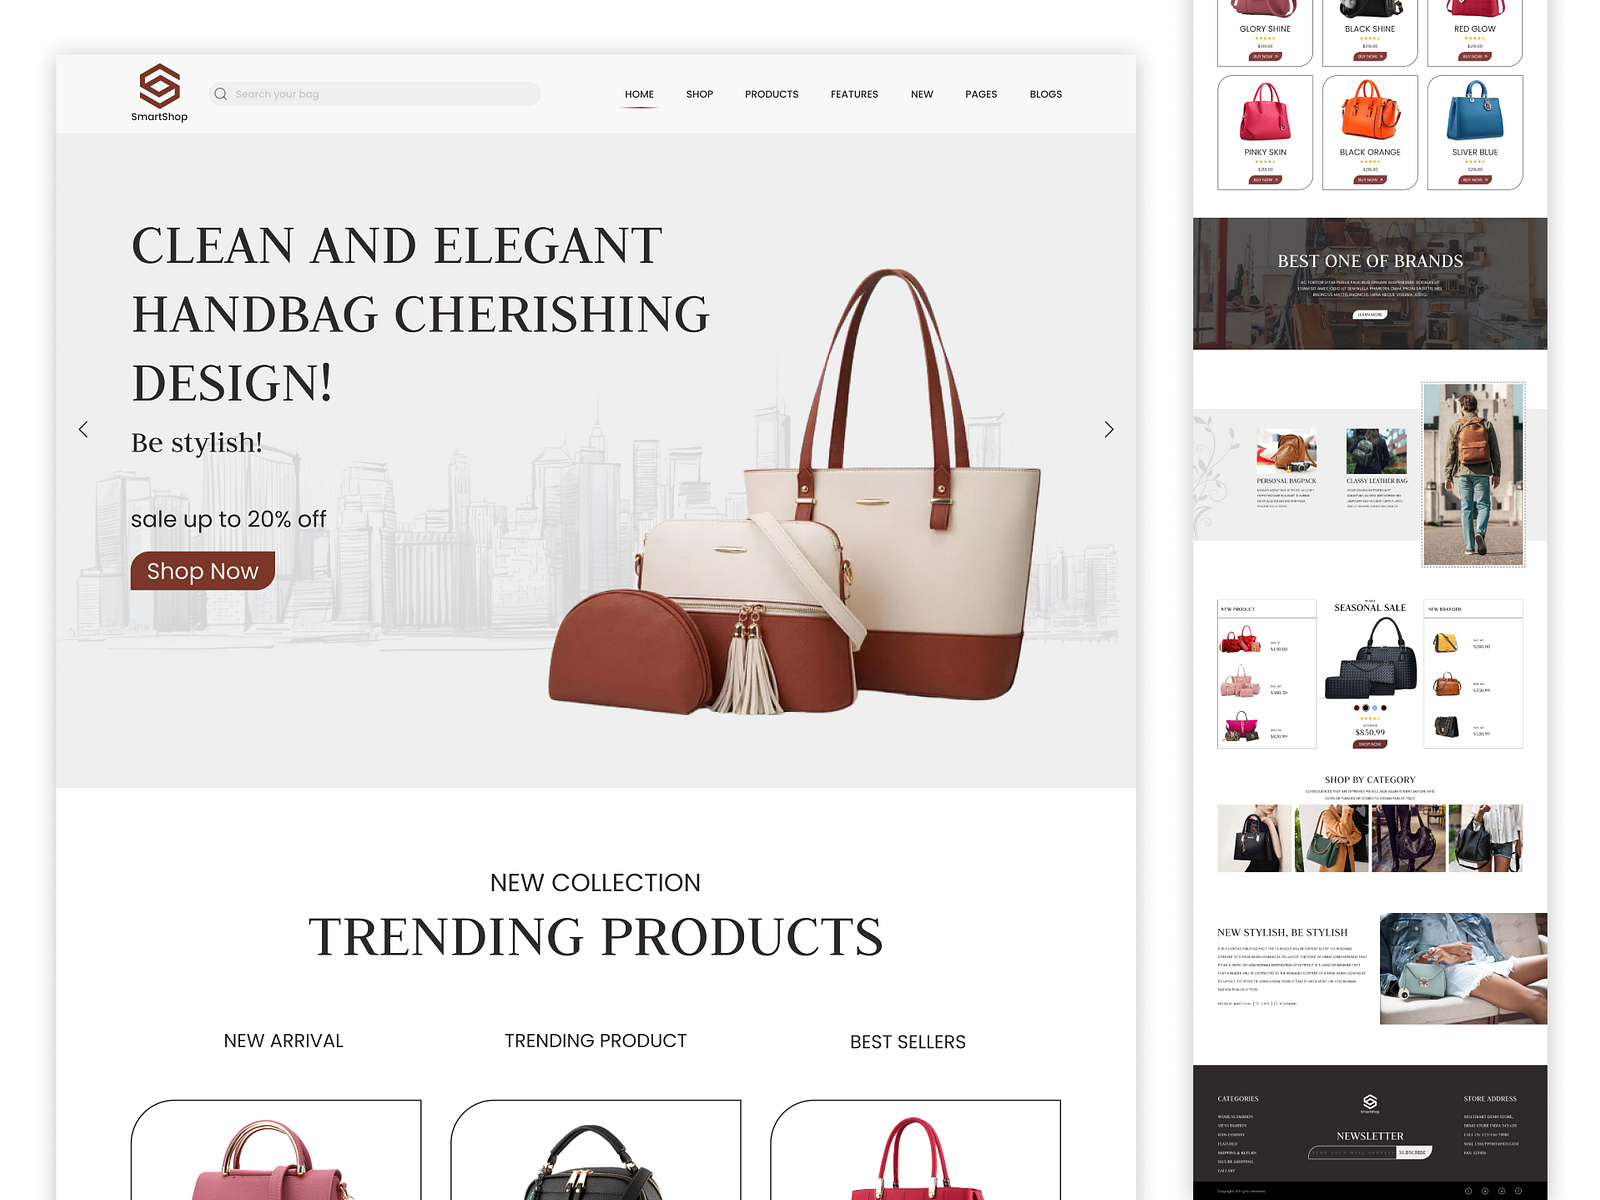 E-Commerce Bag Landing Page by Bitmate Studio on Dribbble